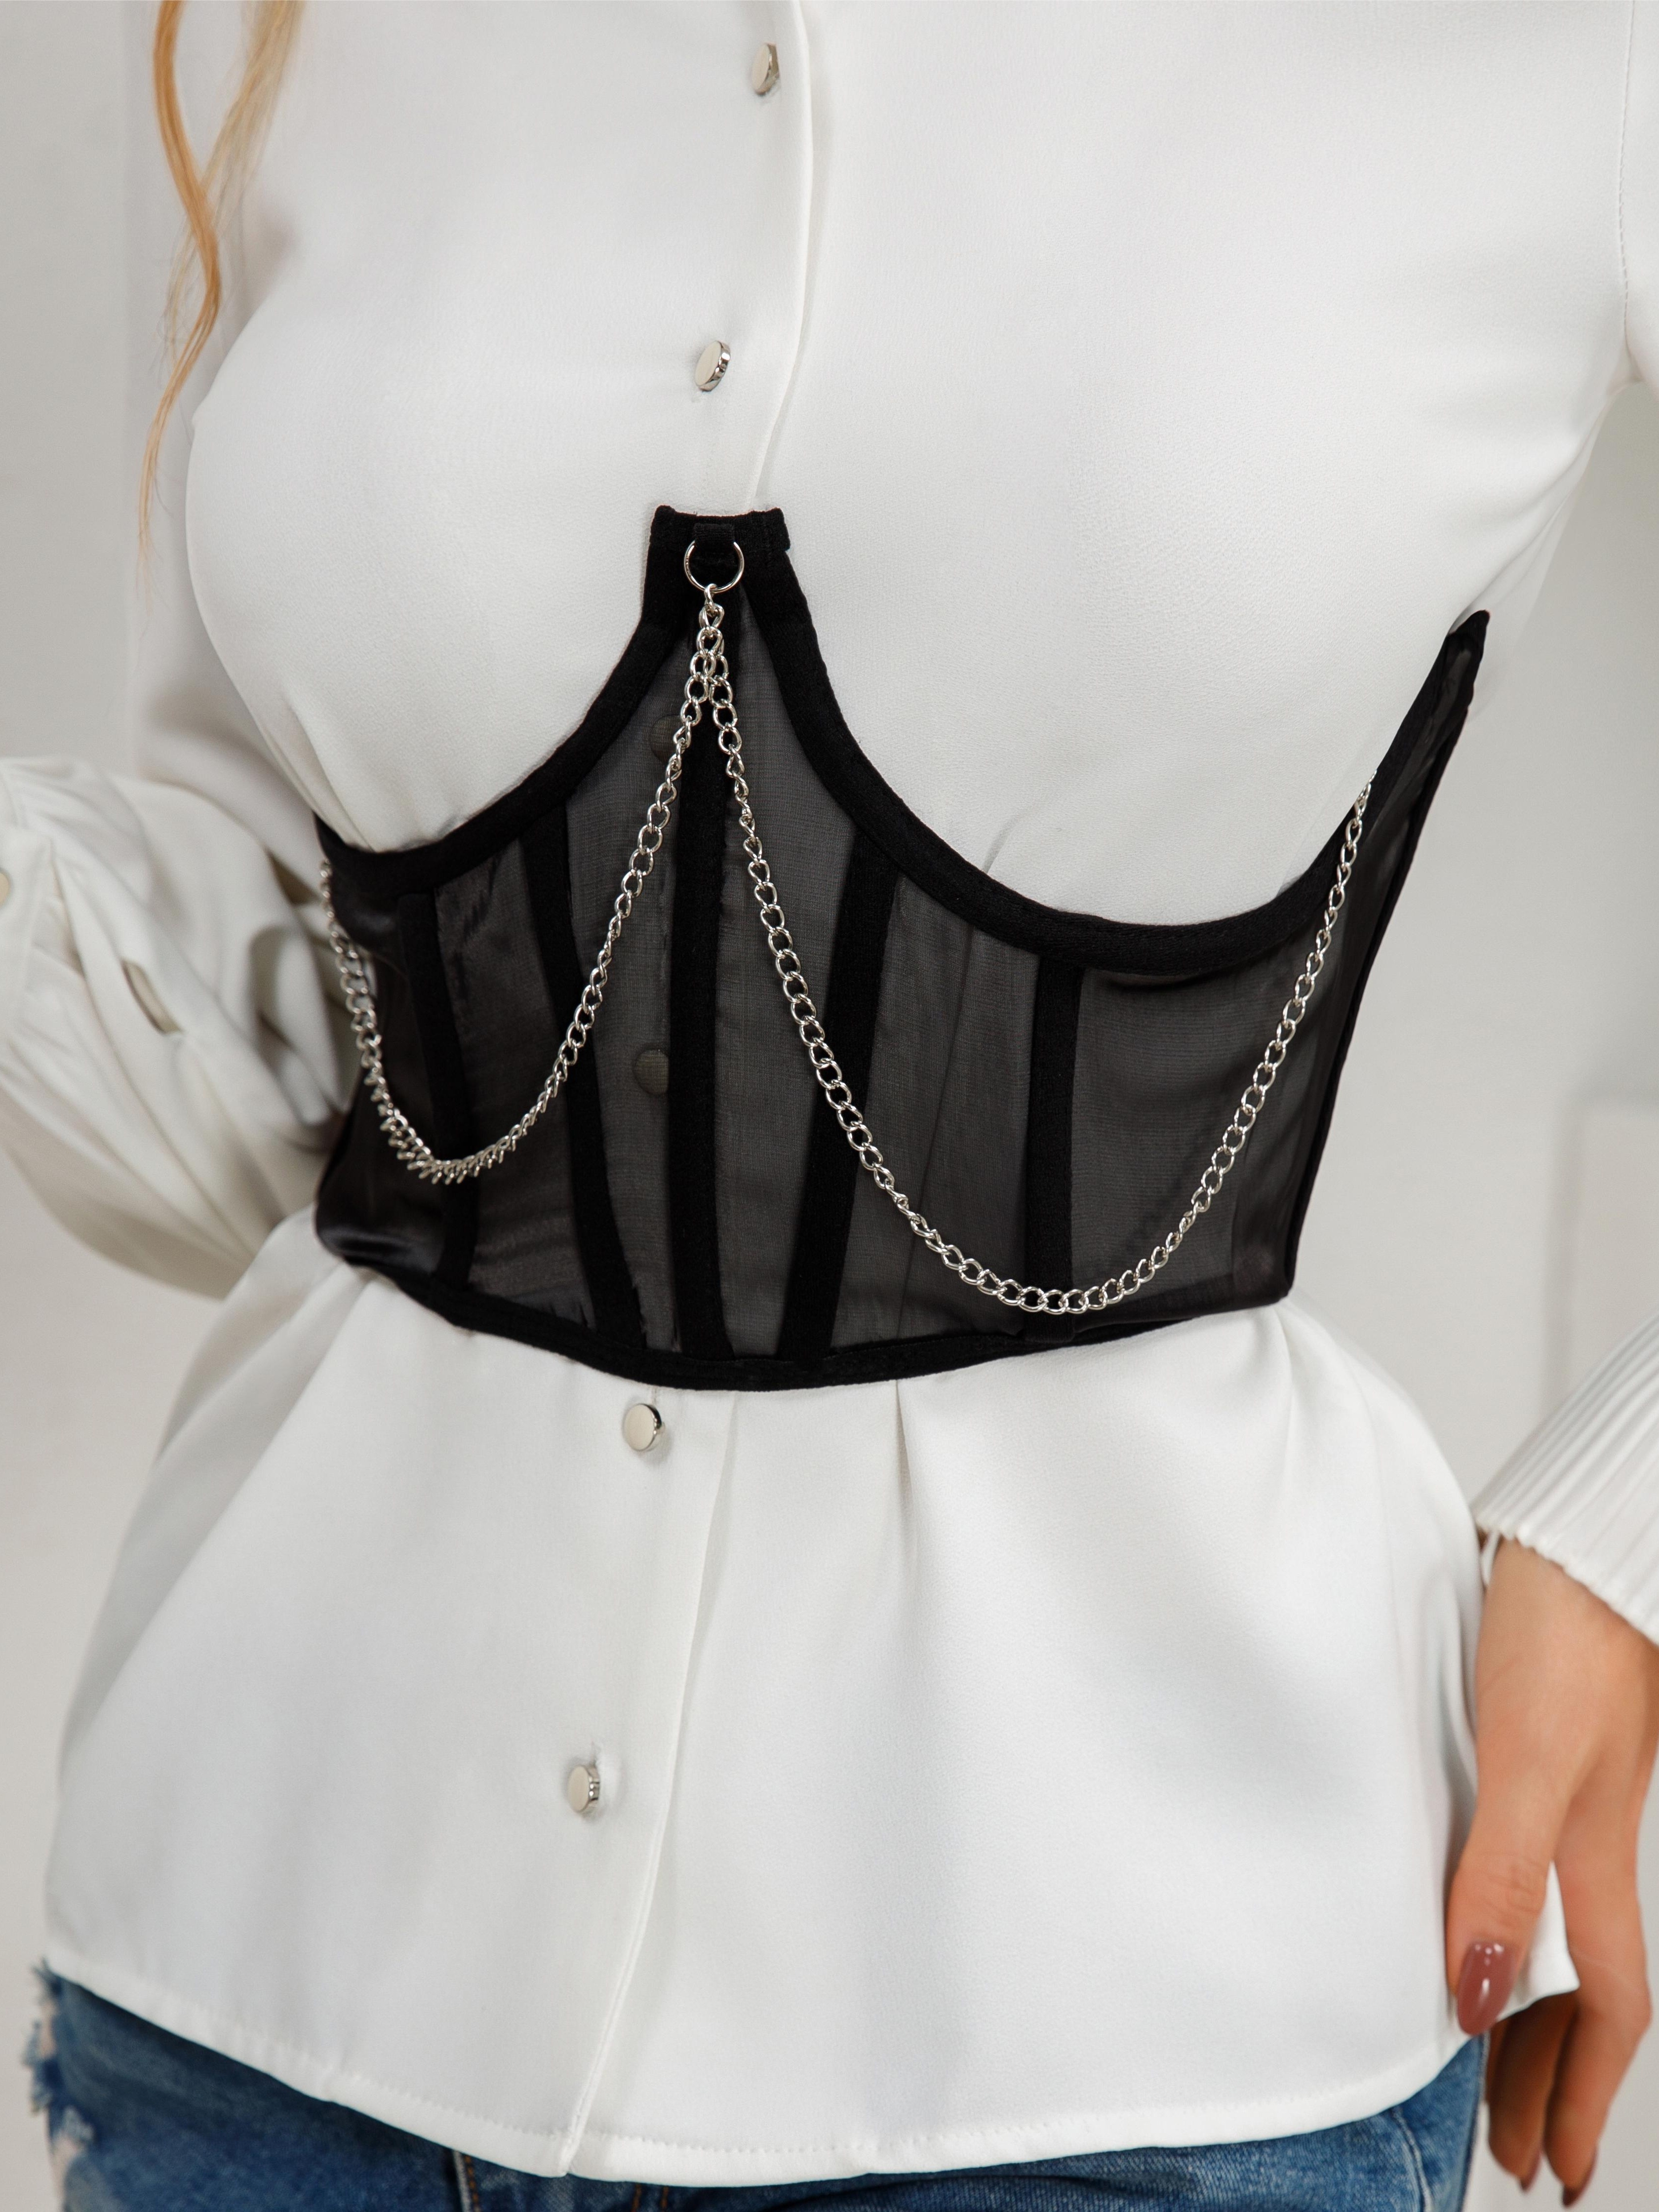 L'VOW Women's Strapless Mesh Bustier Backless Corset Bodyshaper Crop Top ( Black, Medium) : : Clothing & Accessories